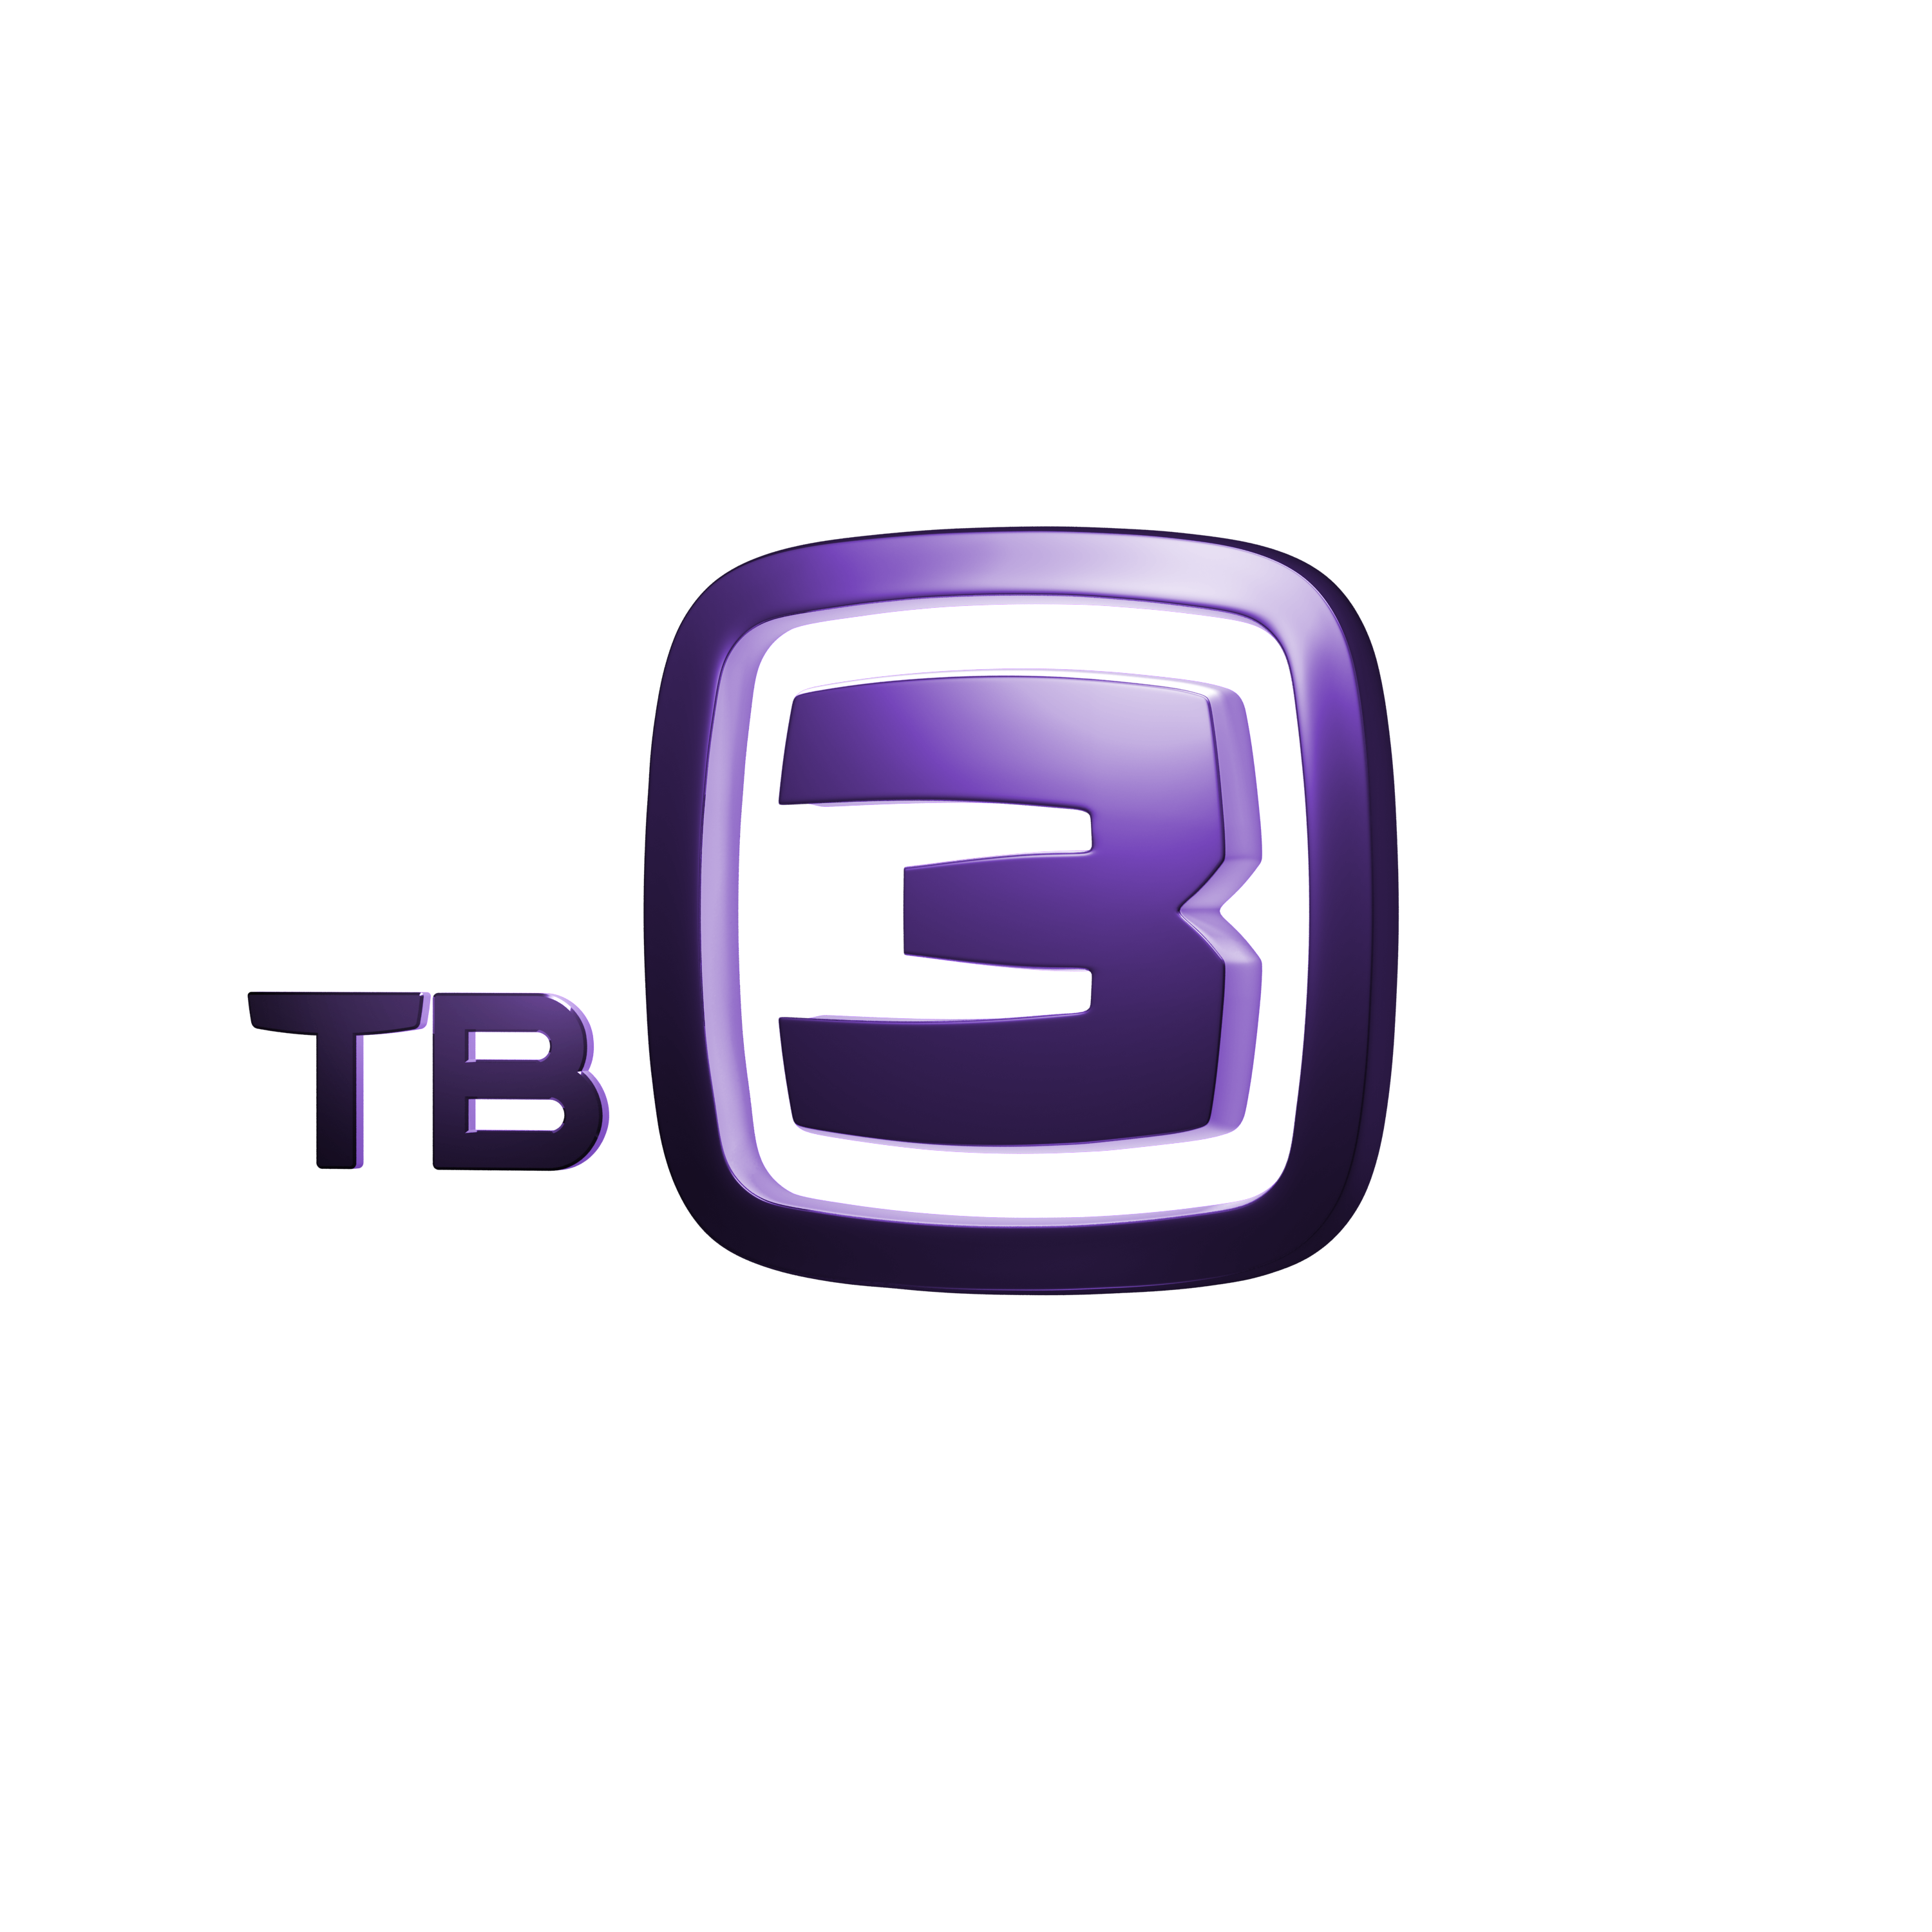 Тв канал 0. Тв3 Телеканал логотип. Канал тв3. Эмблема канала тв3. Тв3 логотип 2015.